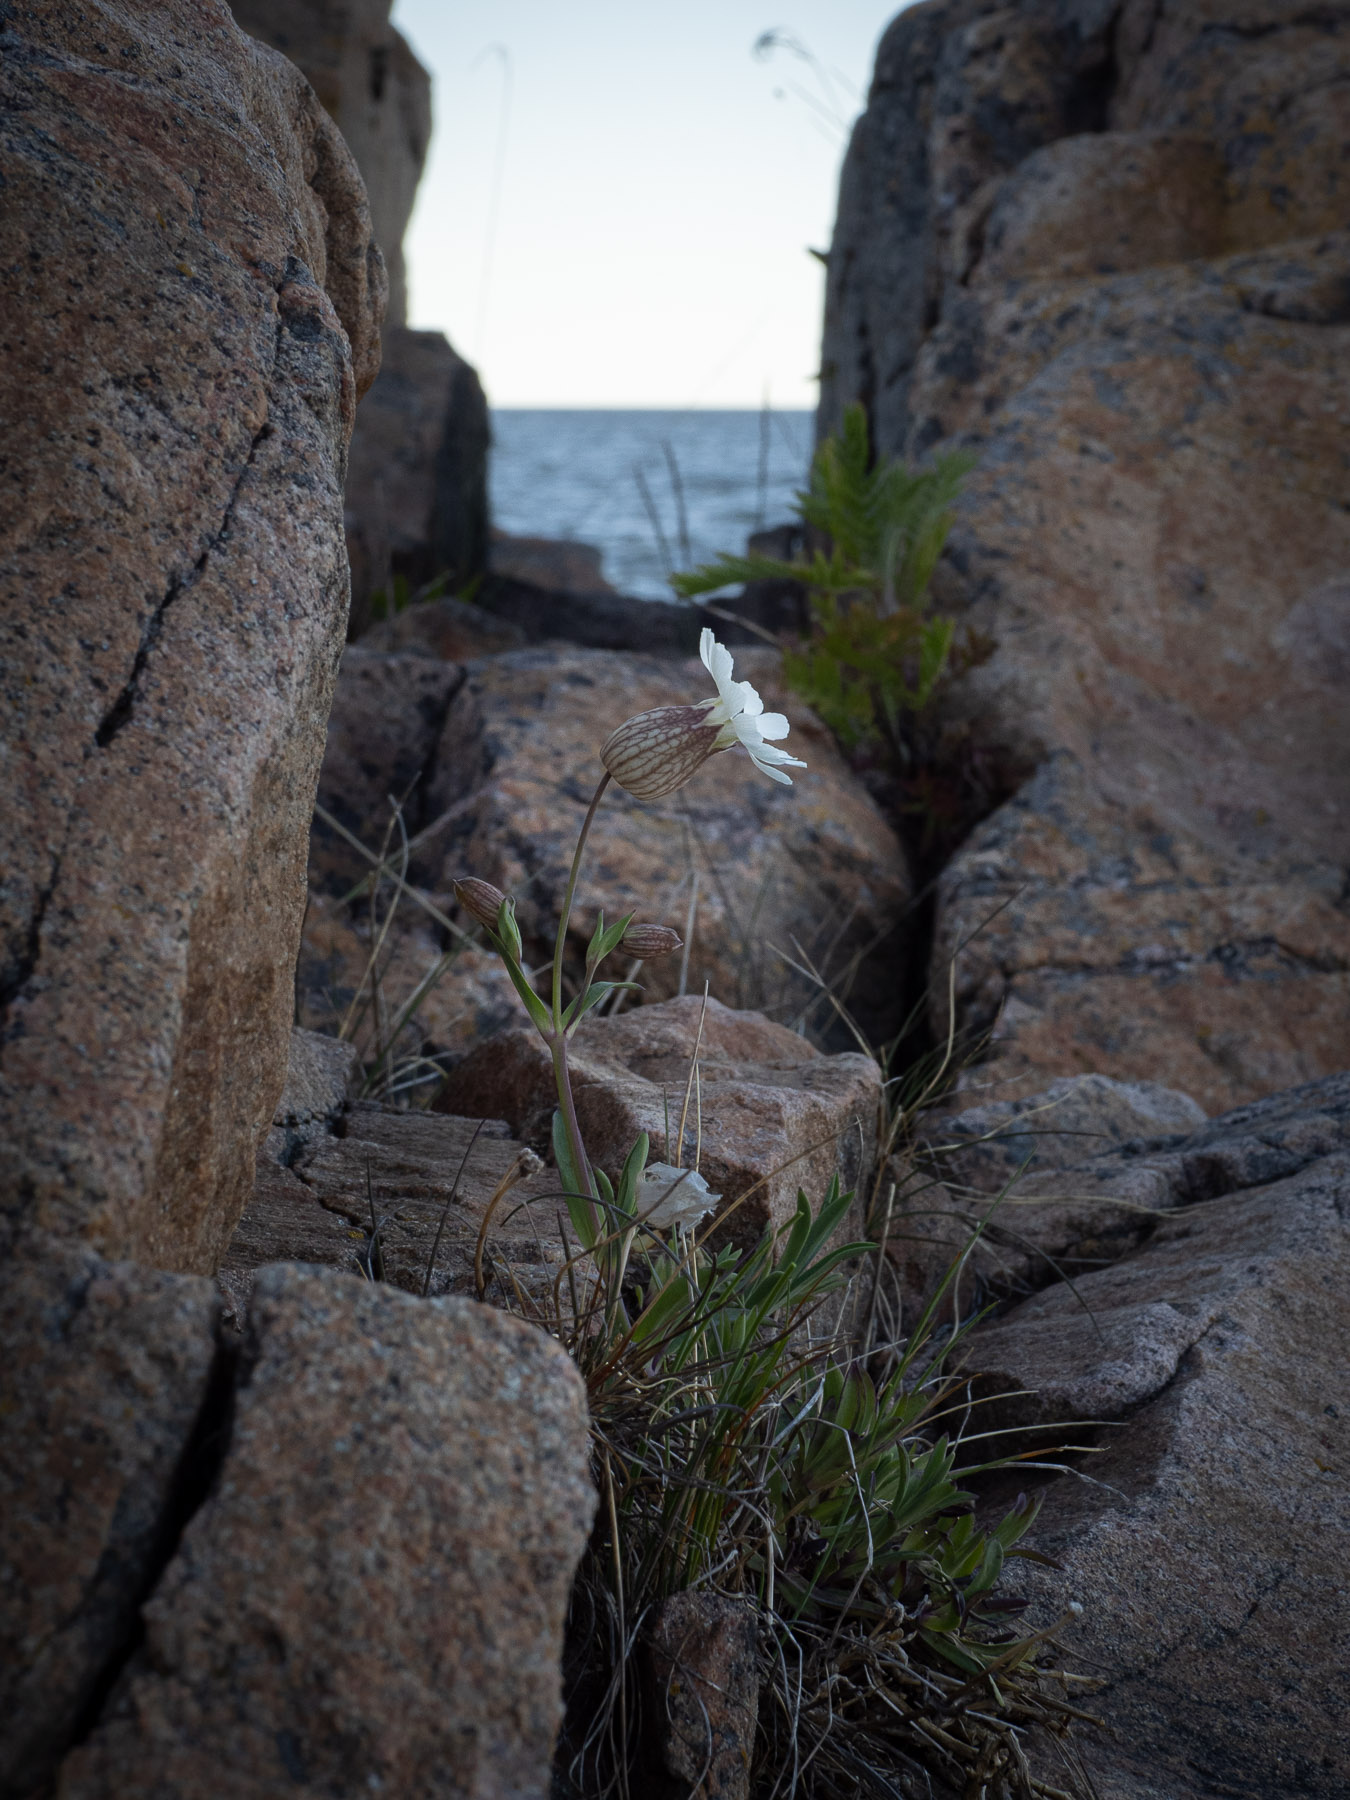 Смолёвка одноцветковая (Silene uniflora) на берегу балтийского моря. Природный парк Kapplasse, май 2020 года. Автор фото: Сутормина Марина